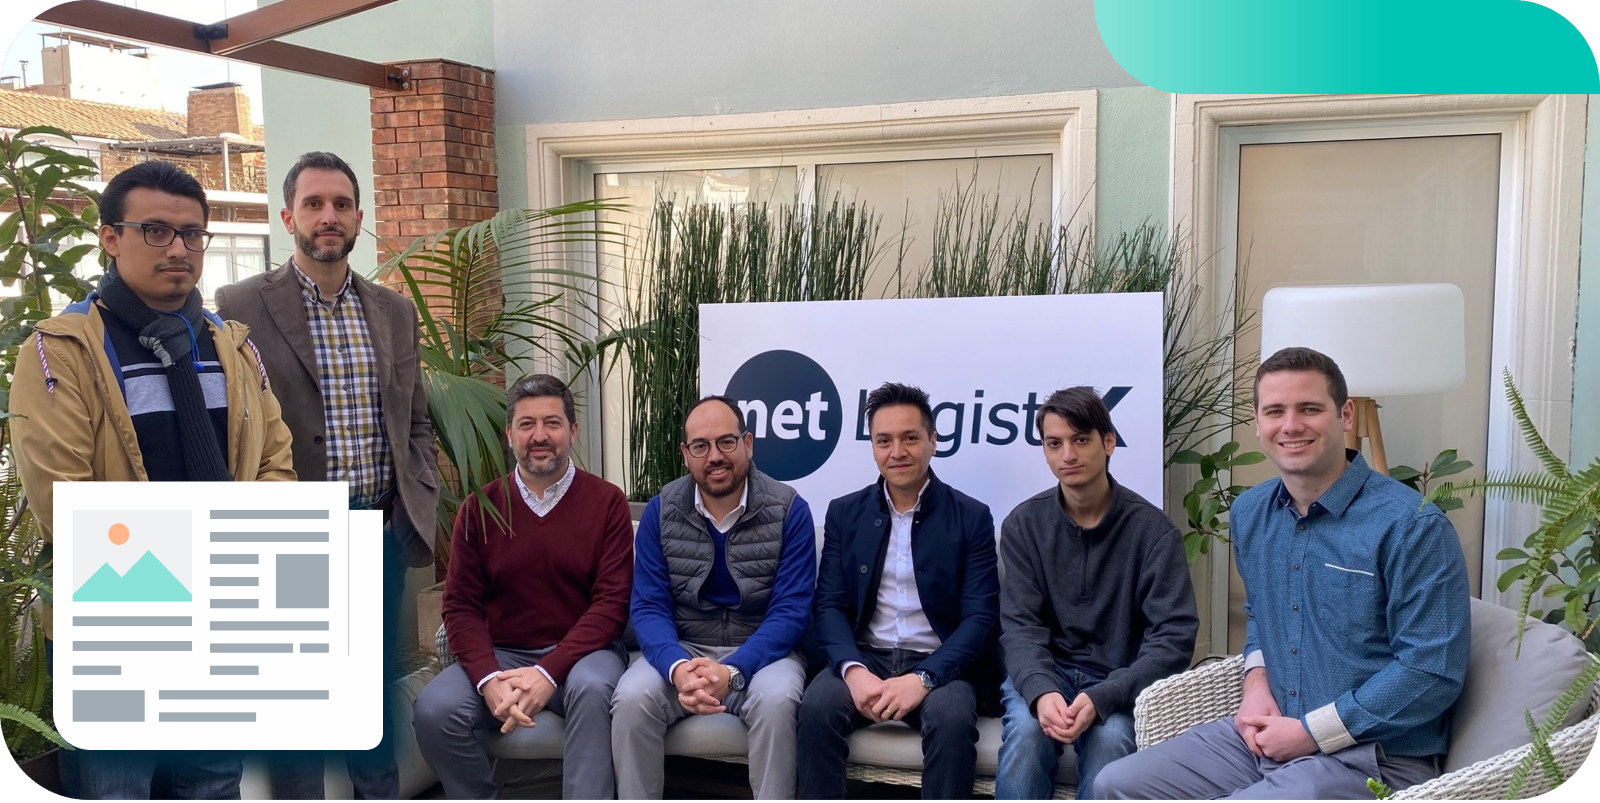 Netlogistik opens its first office in Spain